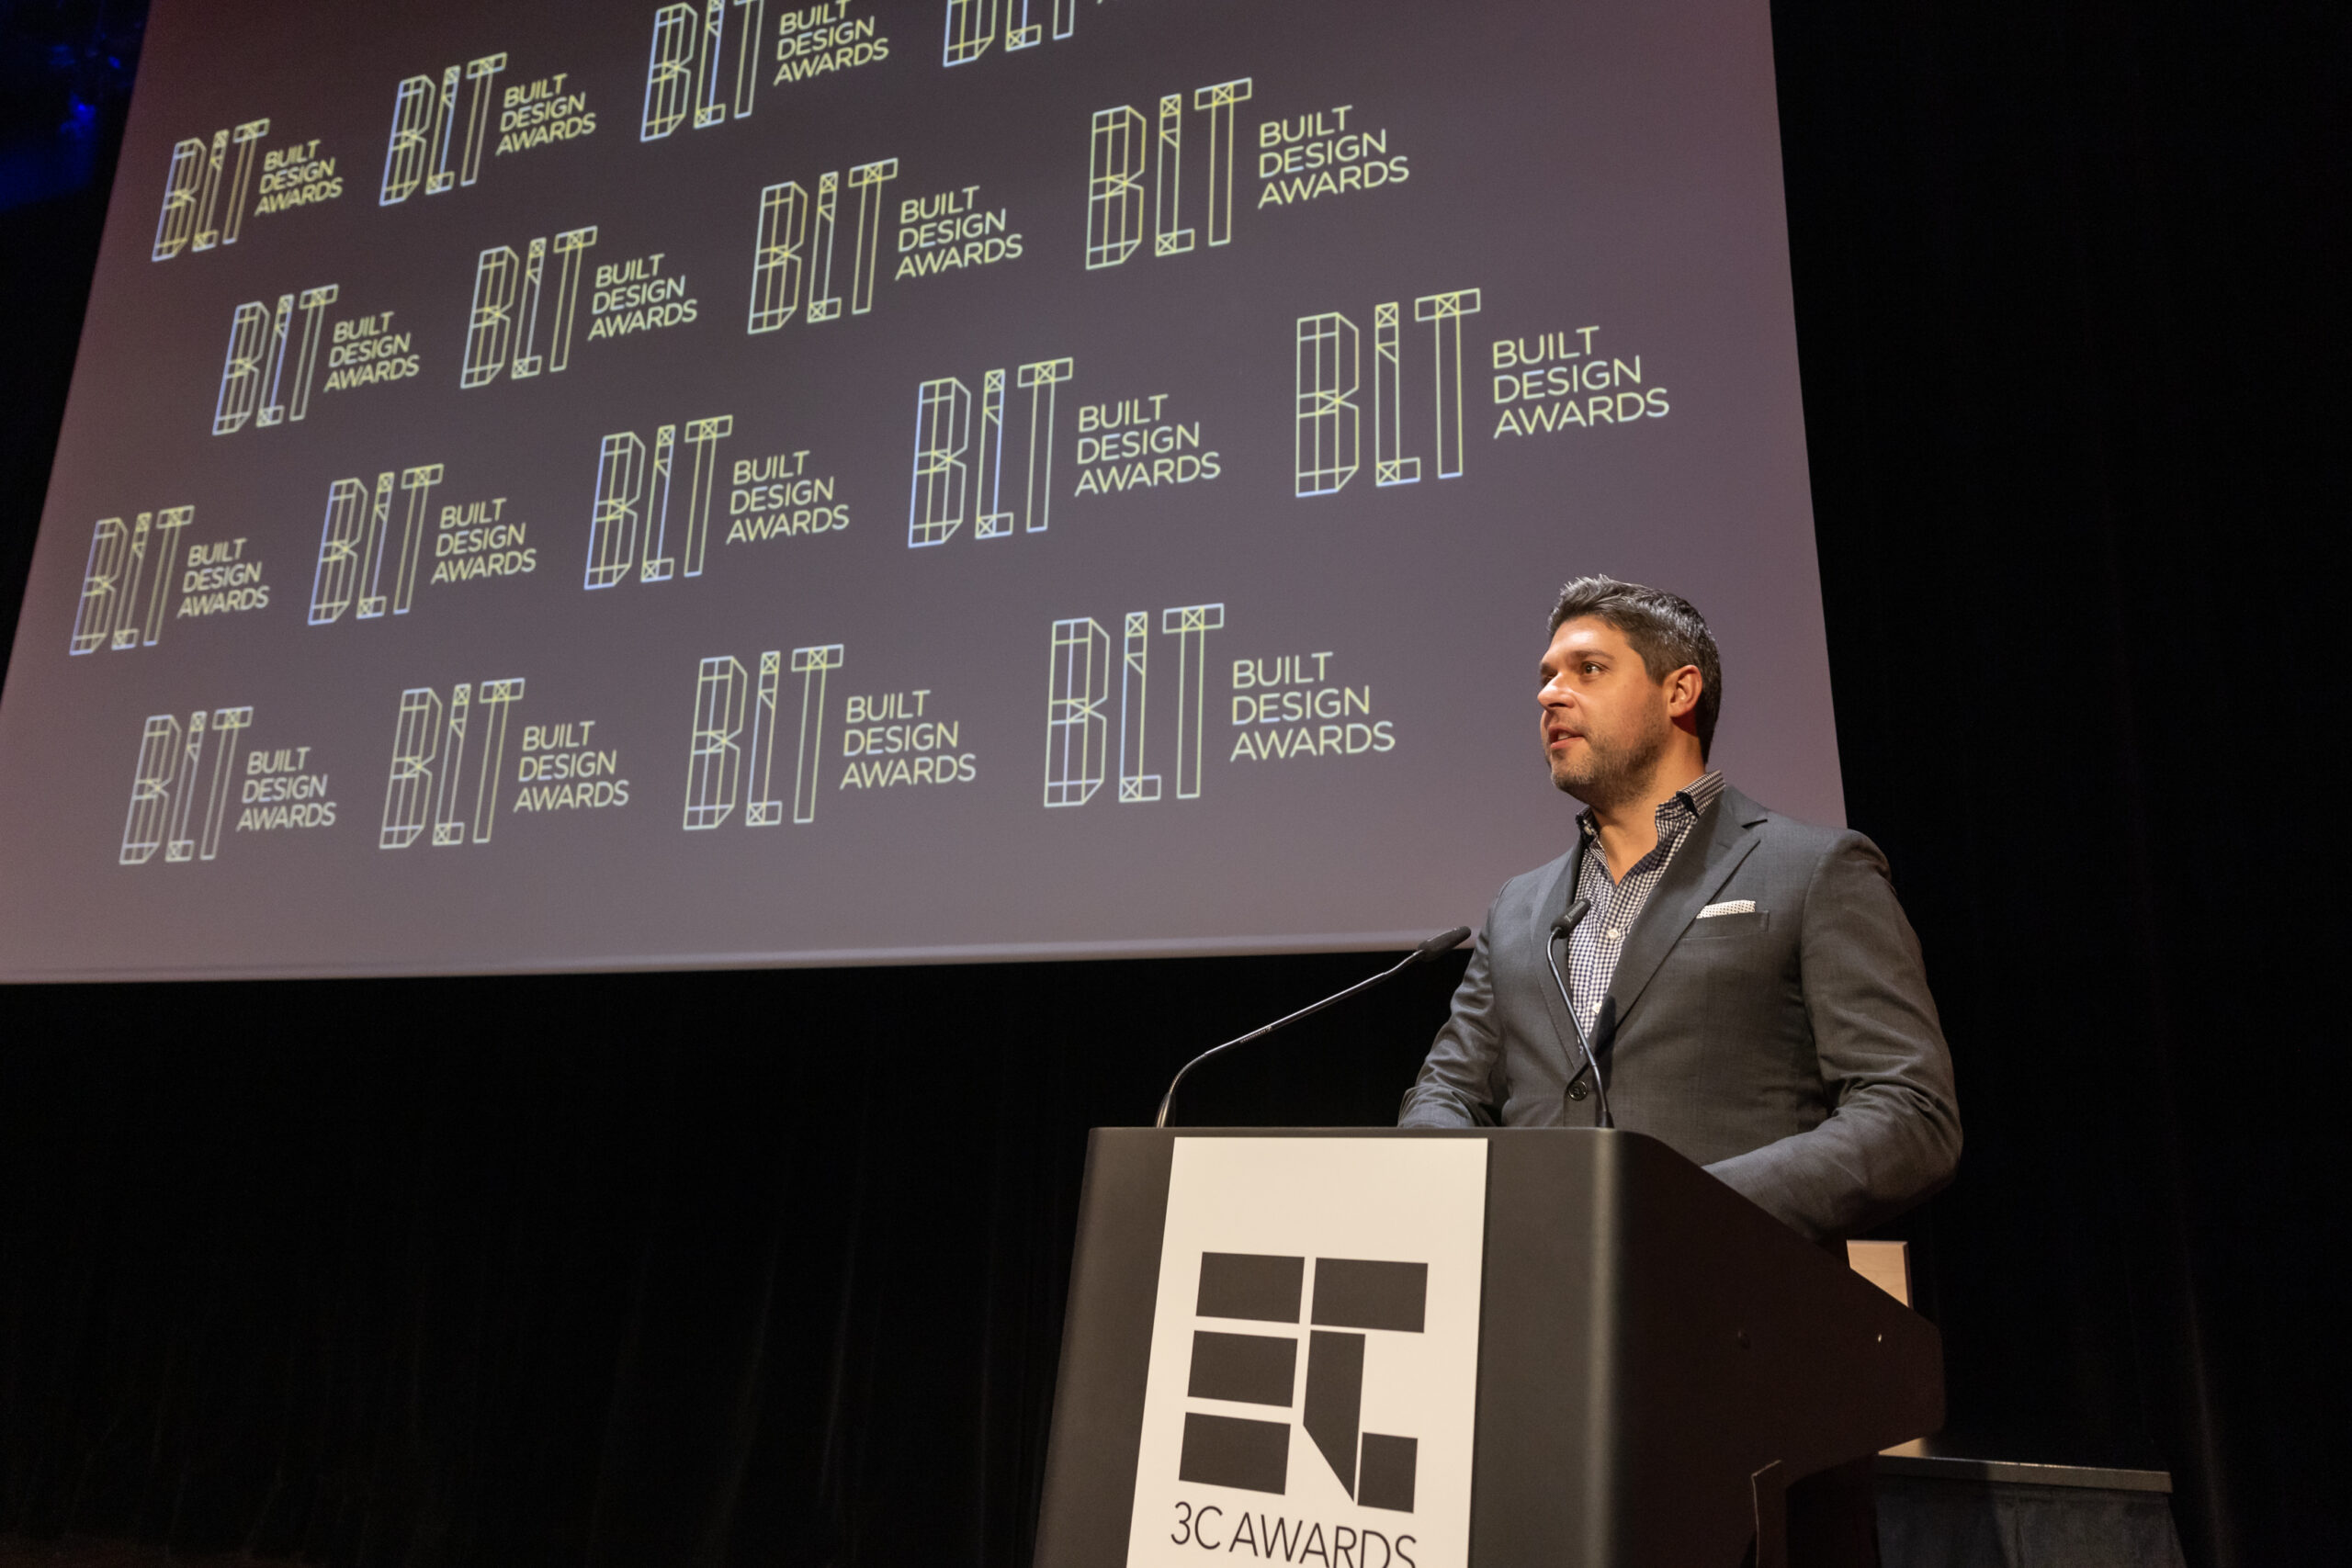 BLT Built Design Awards Gala Celebrates Architects and Designers Visionaries at the KKL Luzern in Switzerland